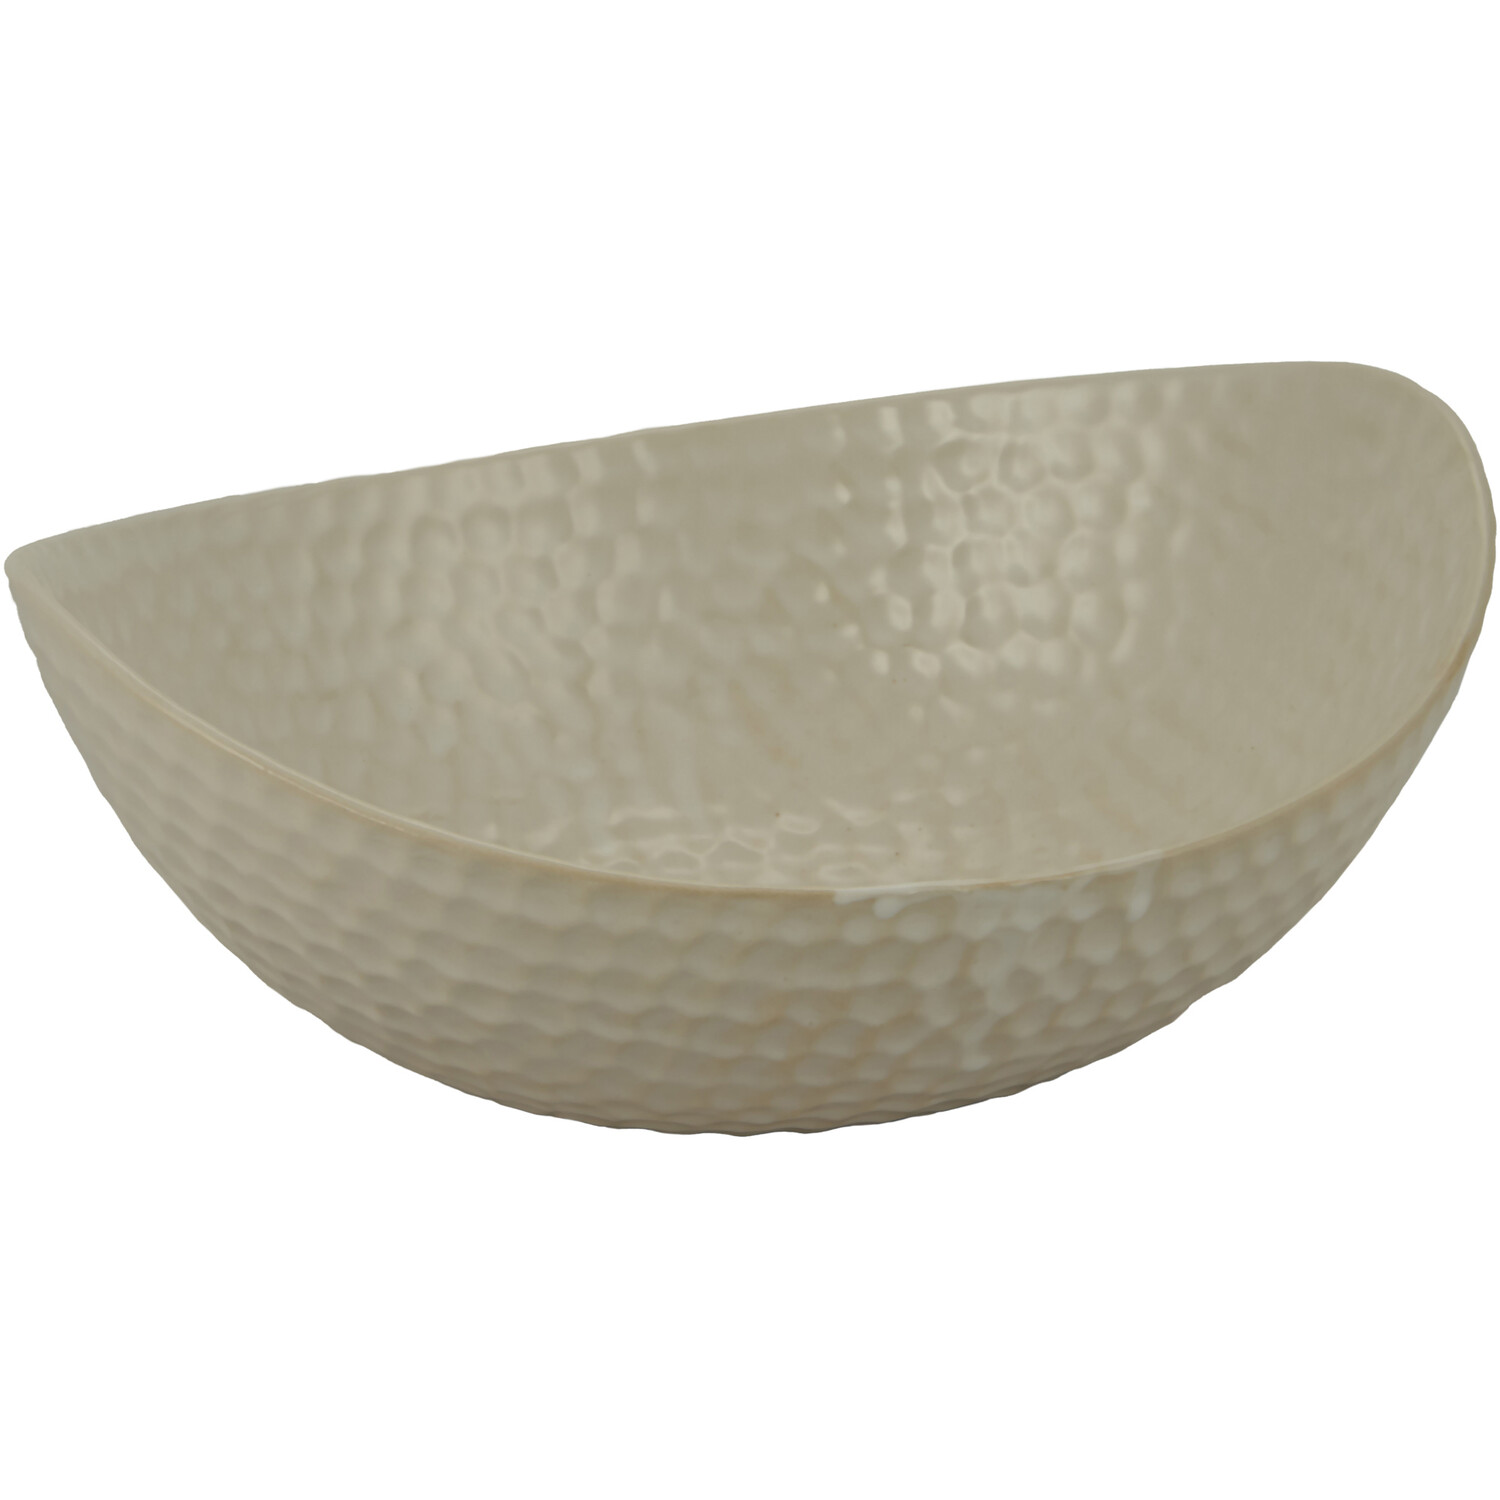 Hammered Matte Bowl - White Image 1